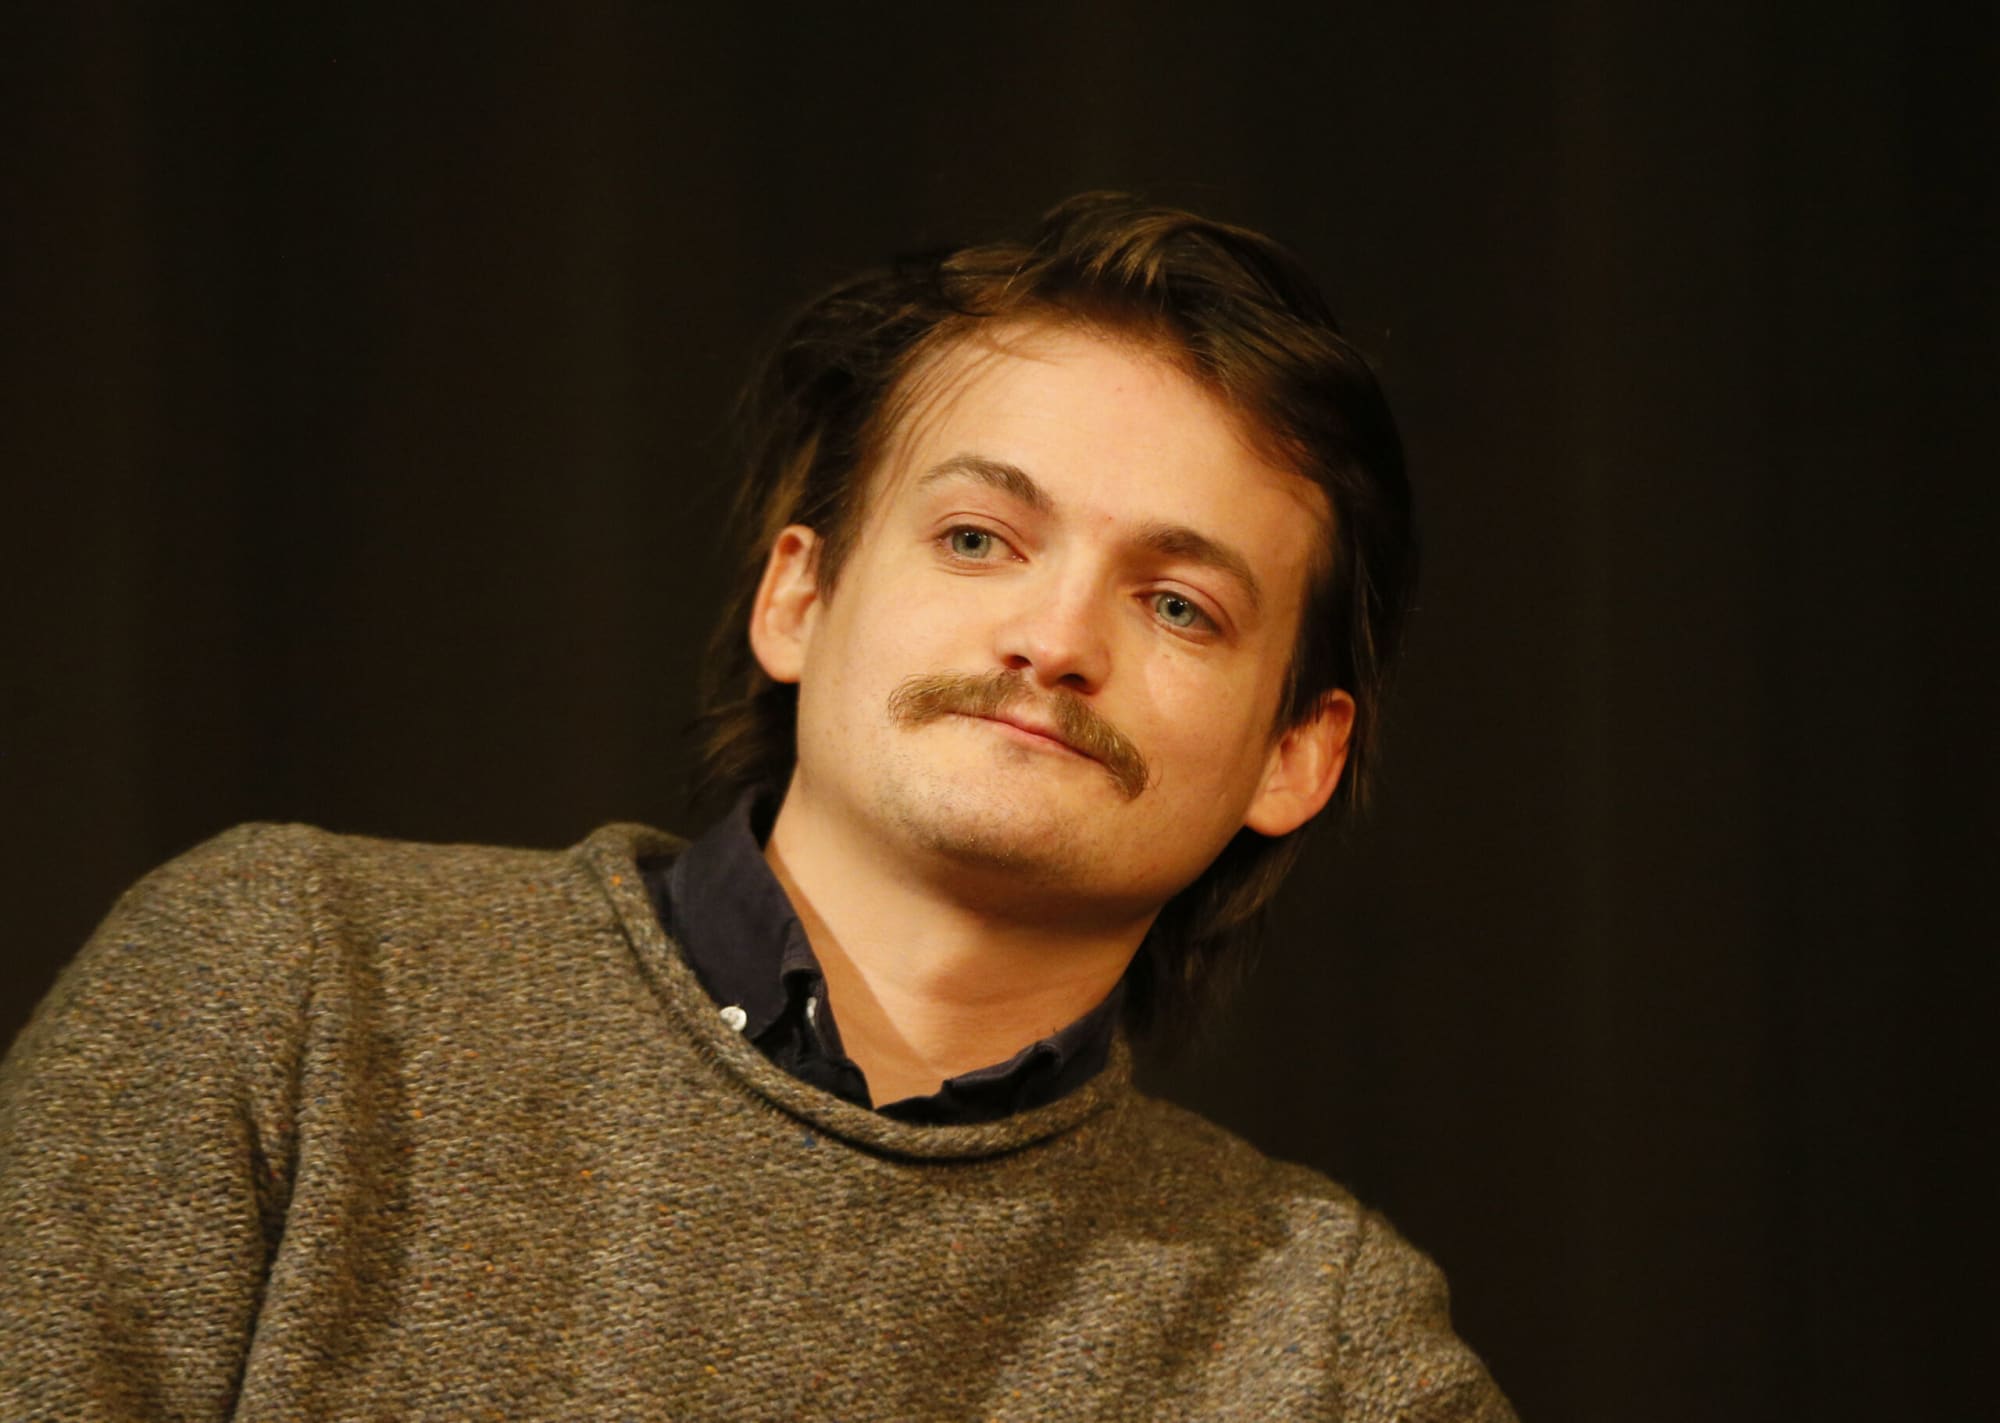 Jack Gleeson (Joffrey from Game of Thrones) rocks mustache in Sex Education season 4